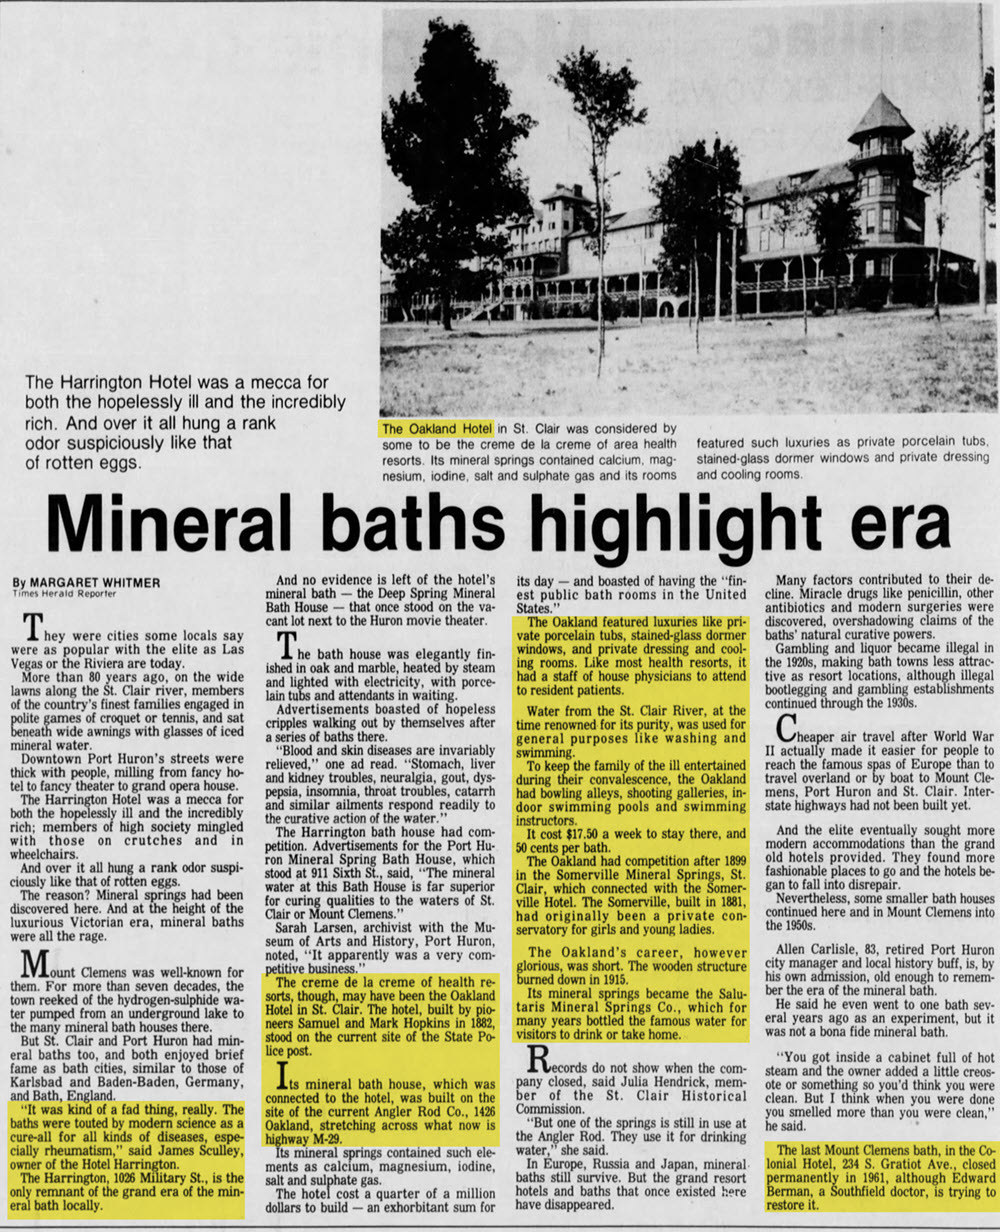 Oakland Hotel - June 14 1983 Article